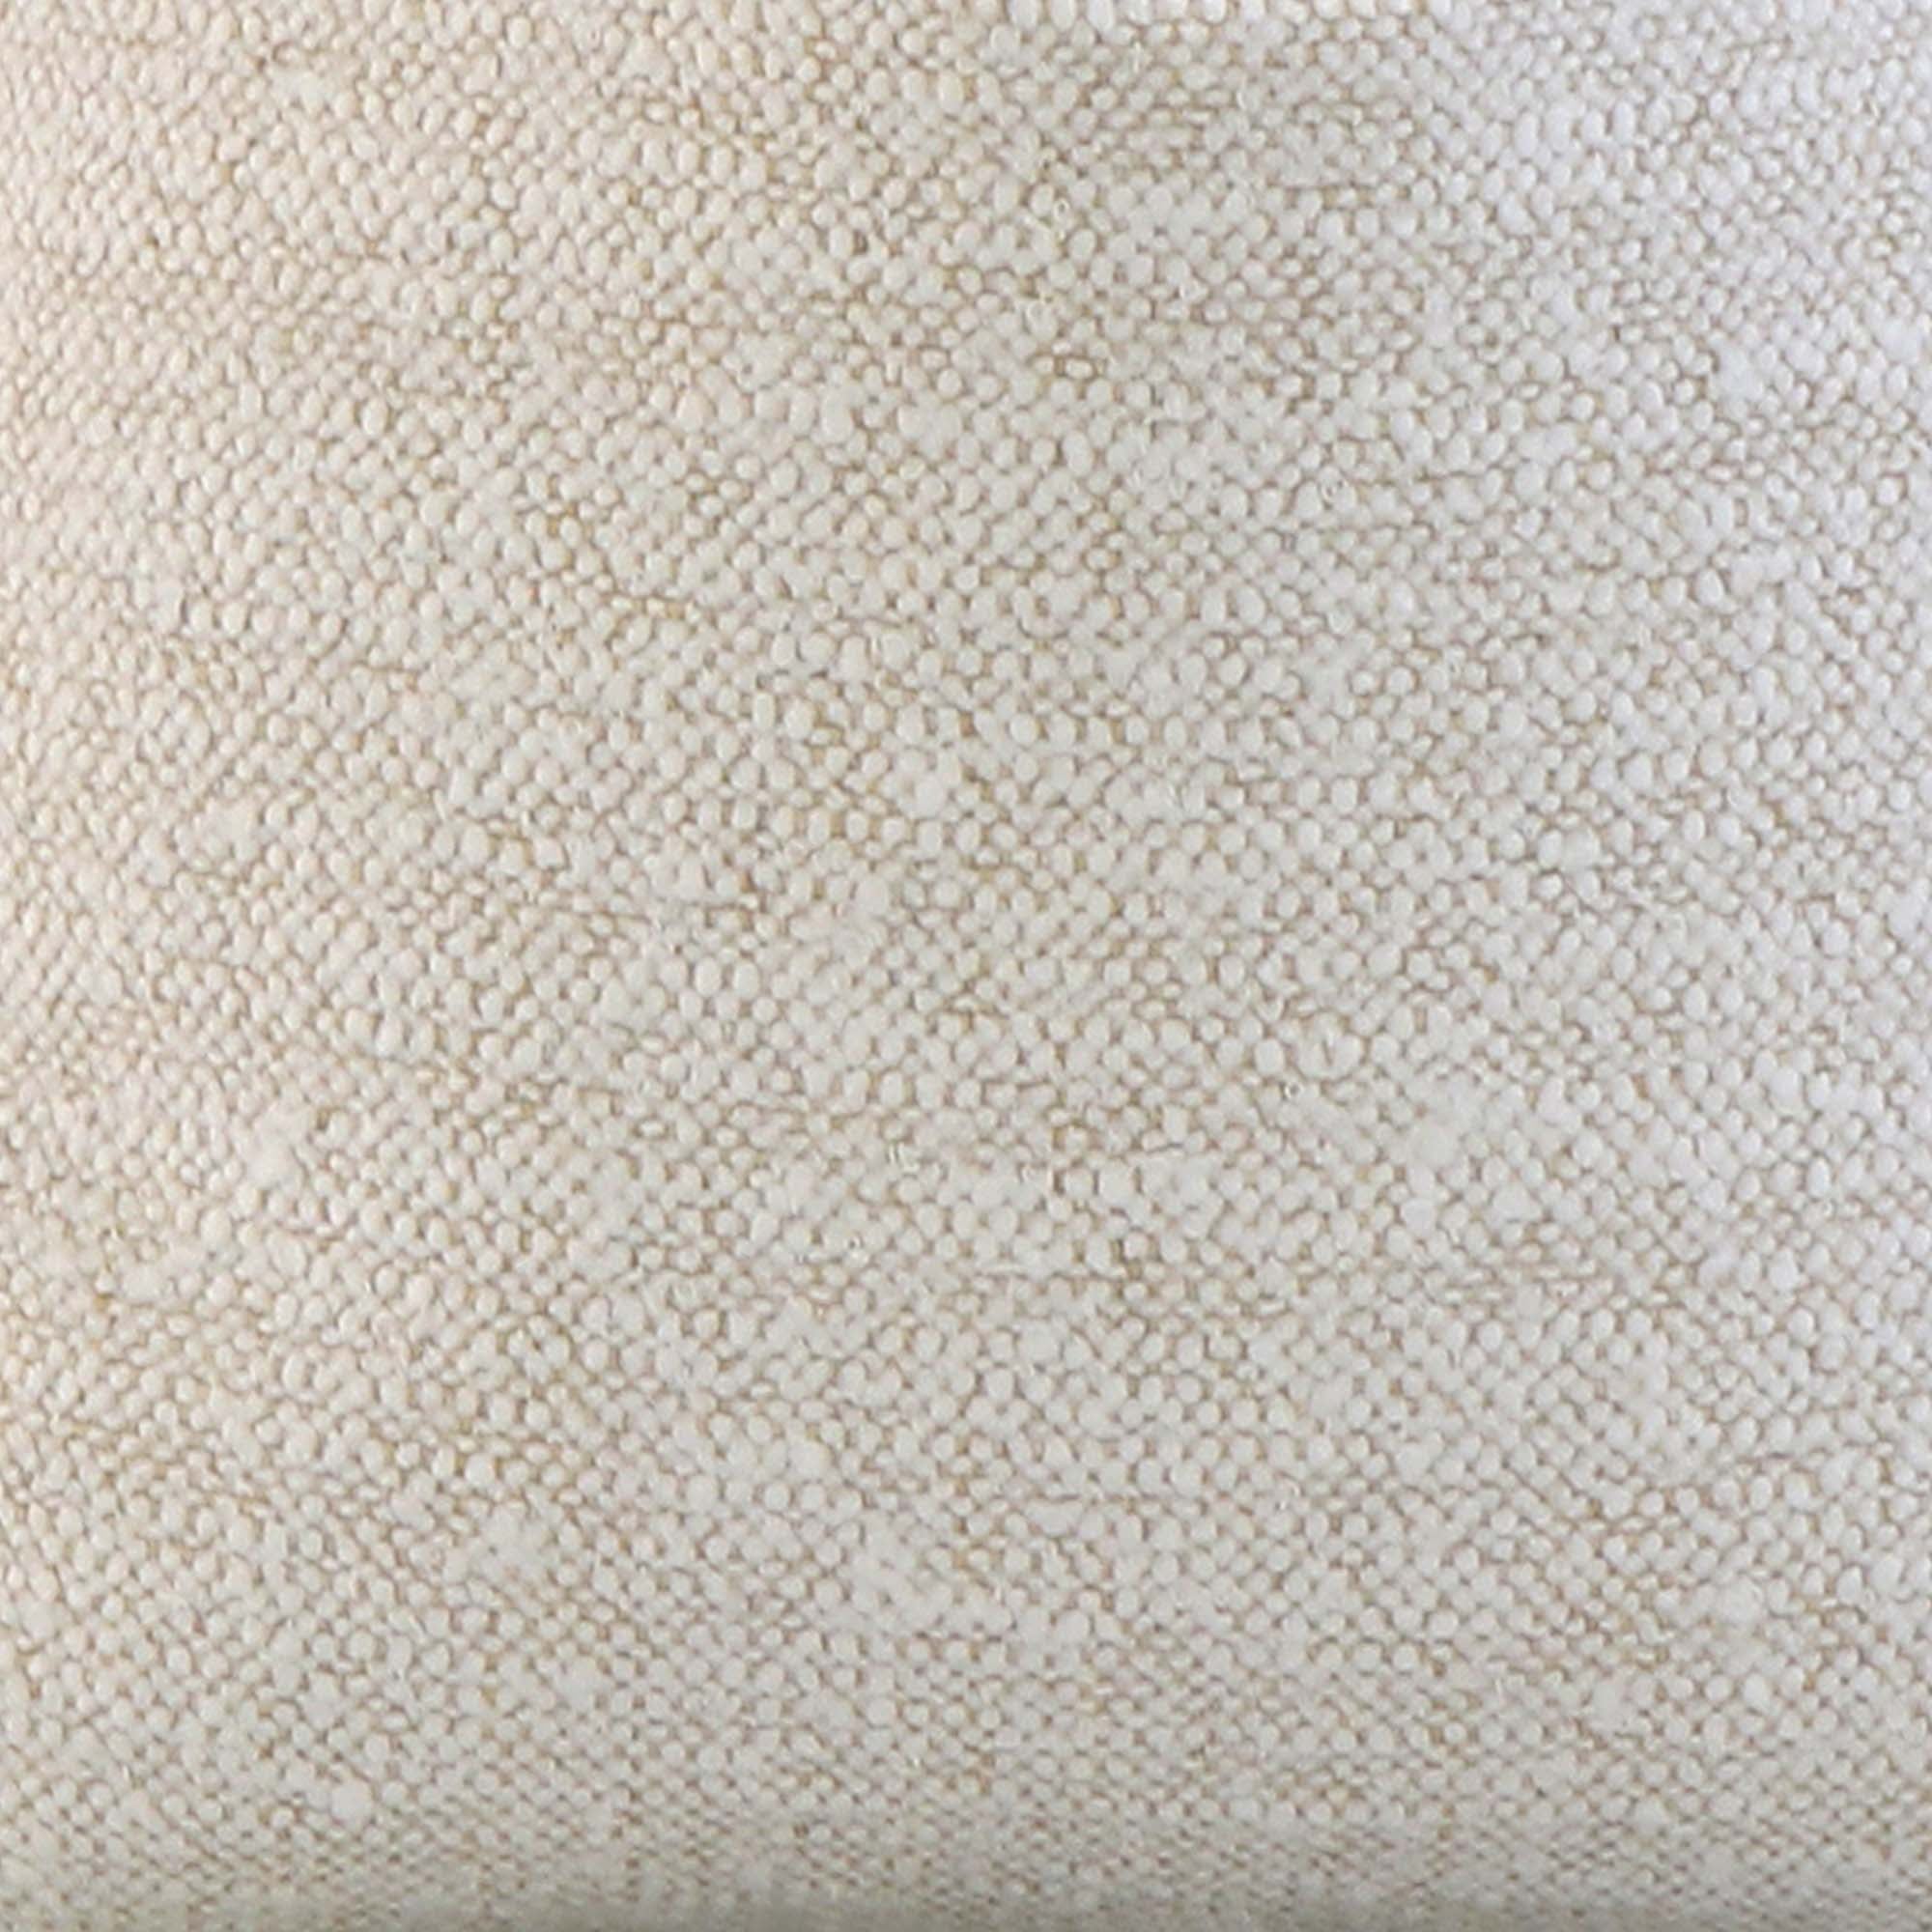 Sasso Parchment / 4x4 inch Fabric Swatch